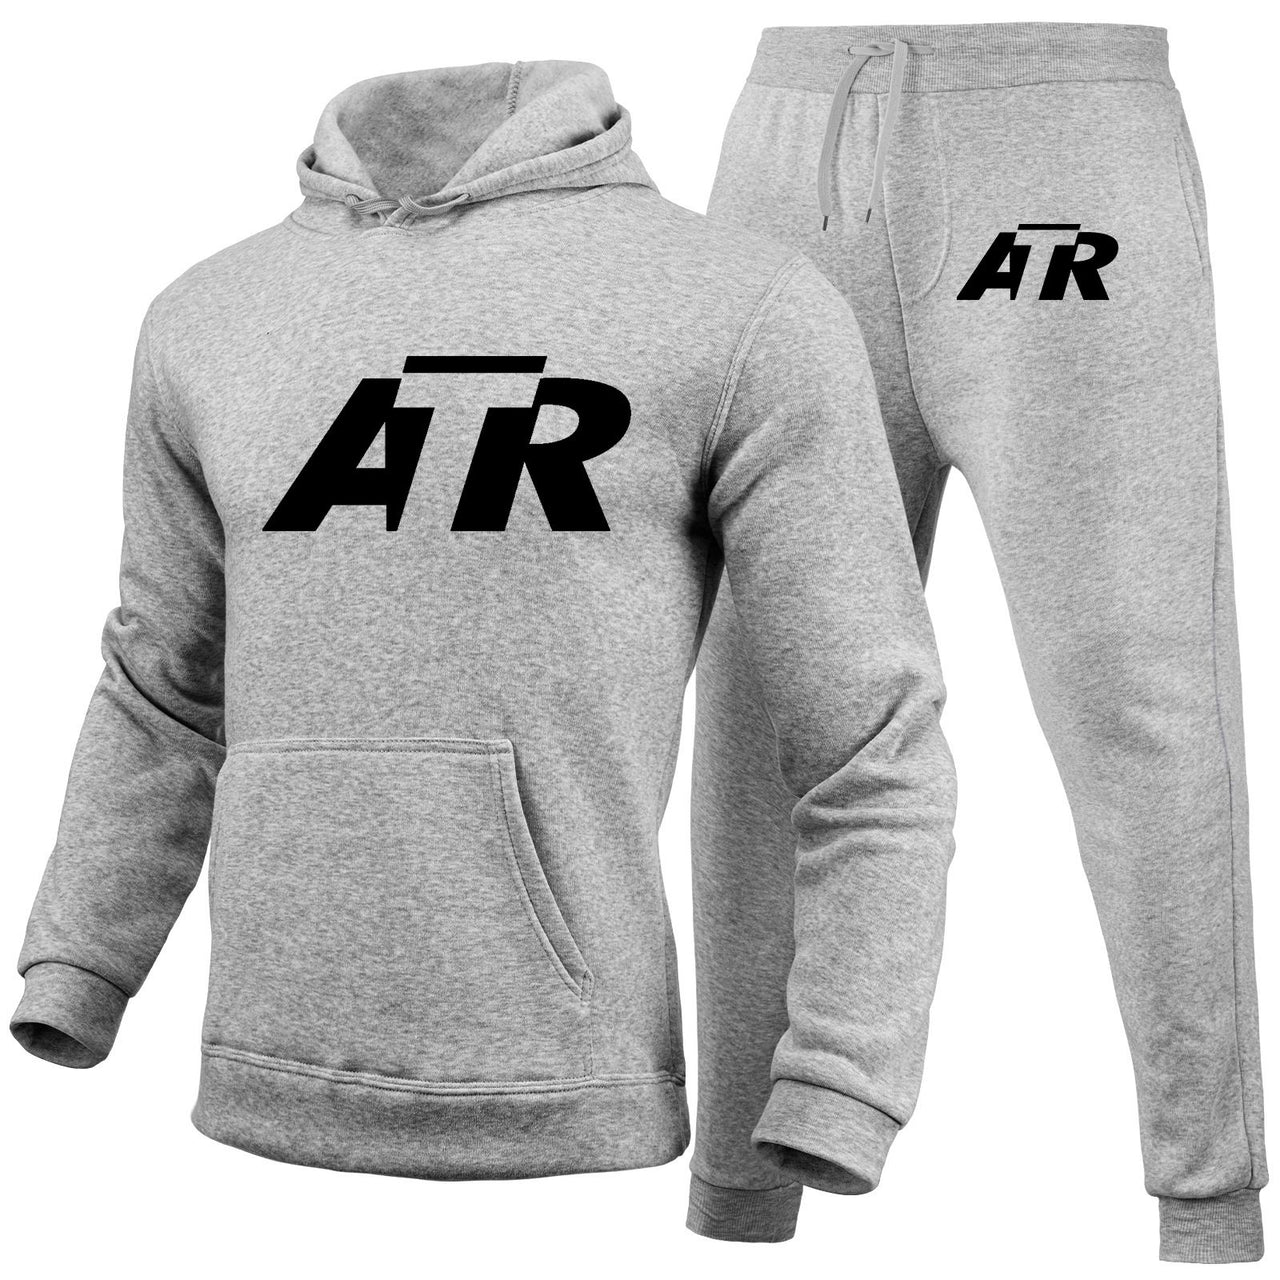 ATR & Text Designed Hoodies & Sweatpants Set